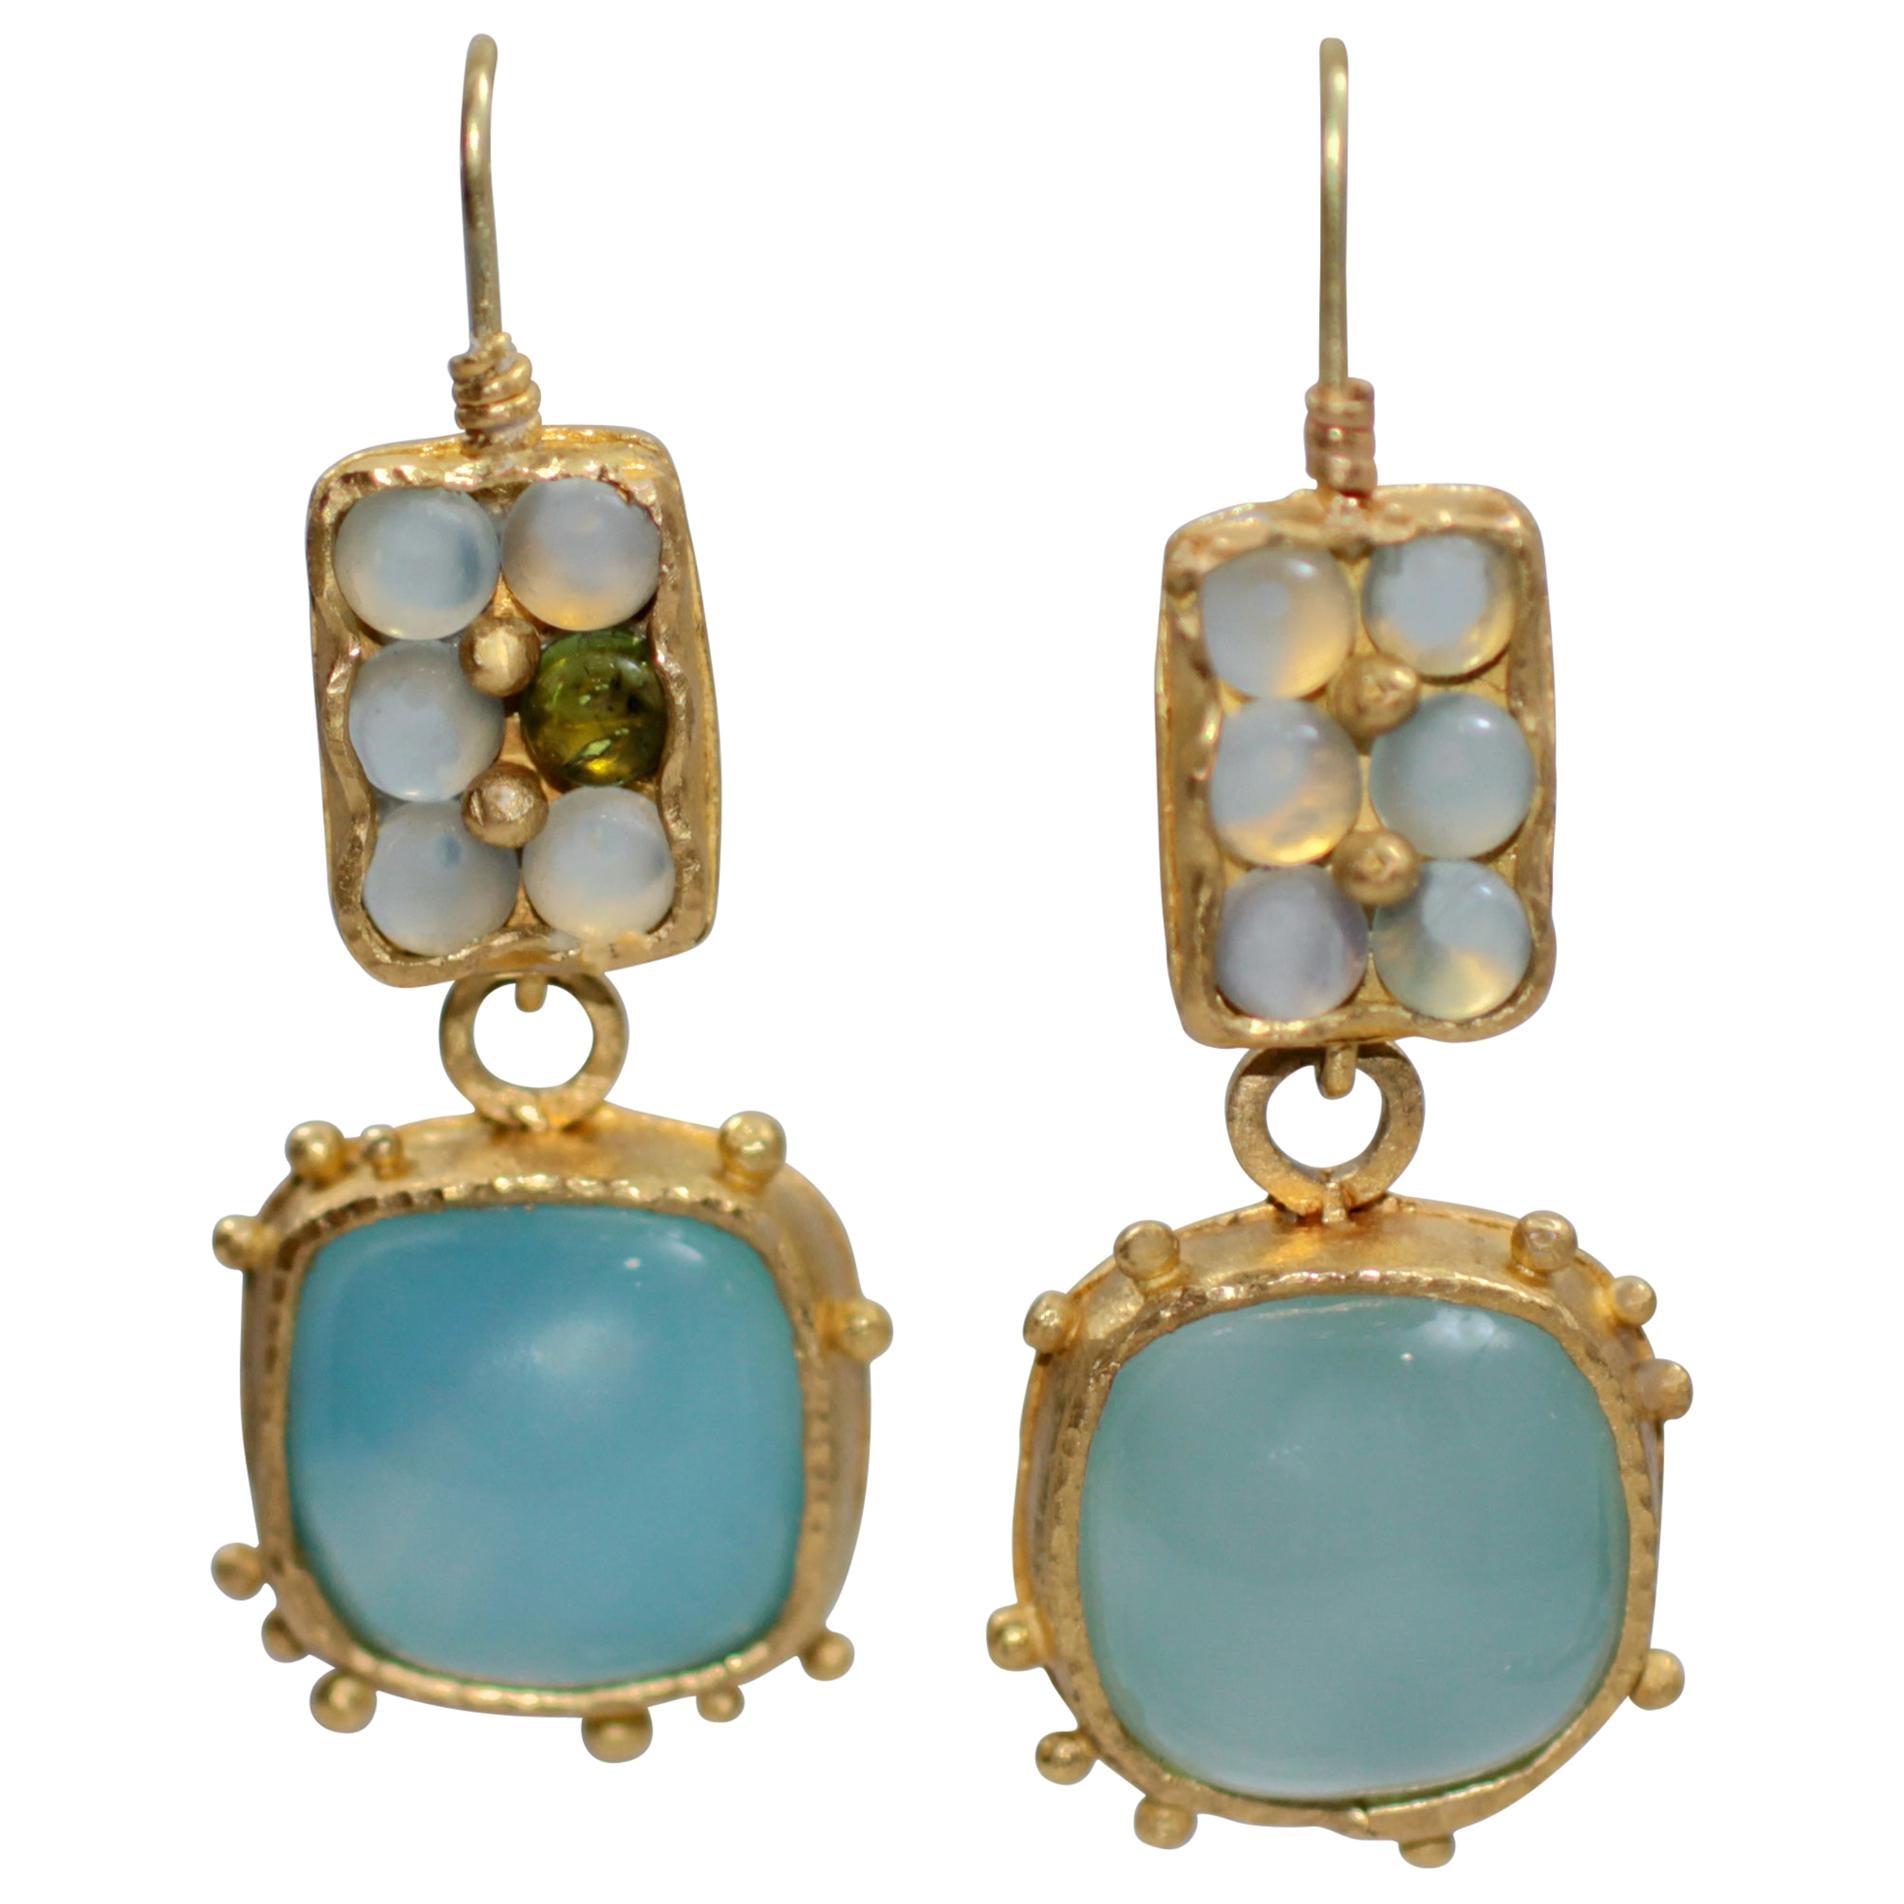 Boucles d'oreilles pendantes en or 22 carats avec cabochon de calcédoine bleu clair